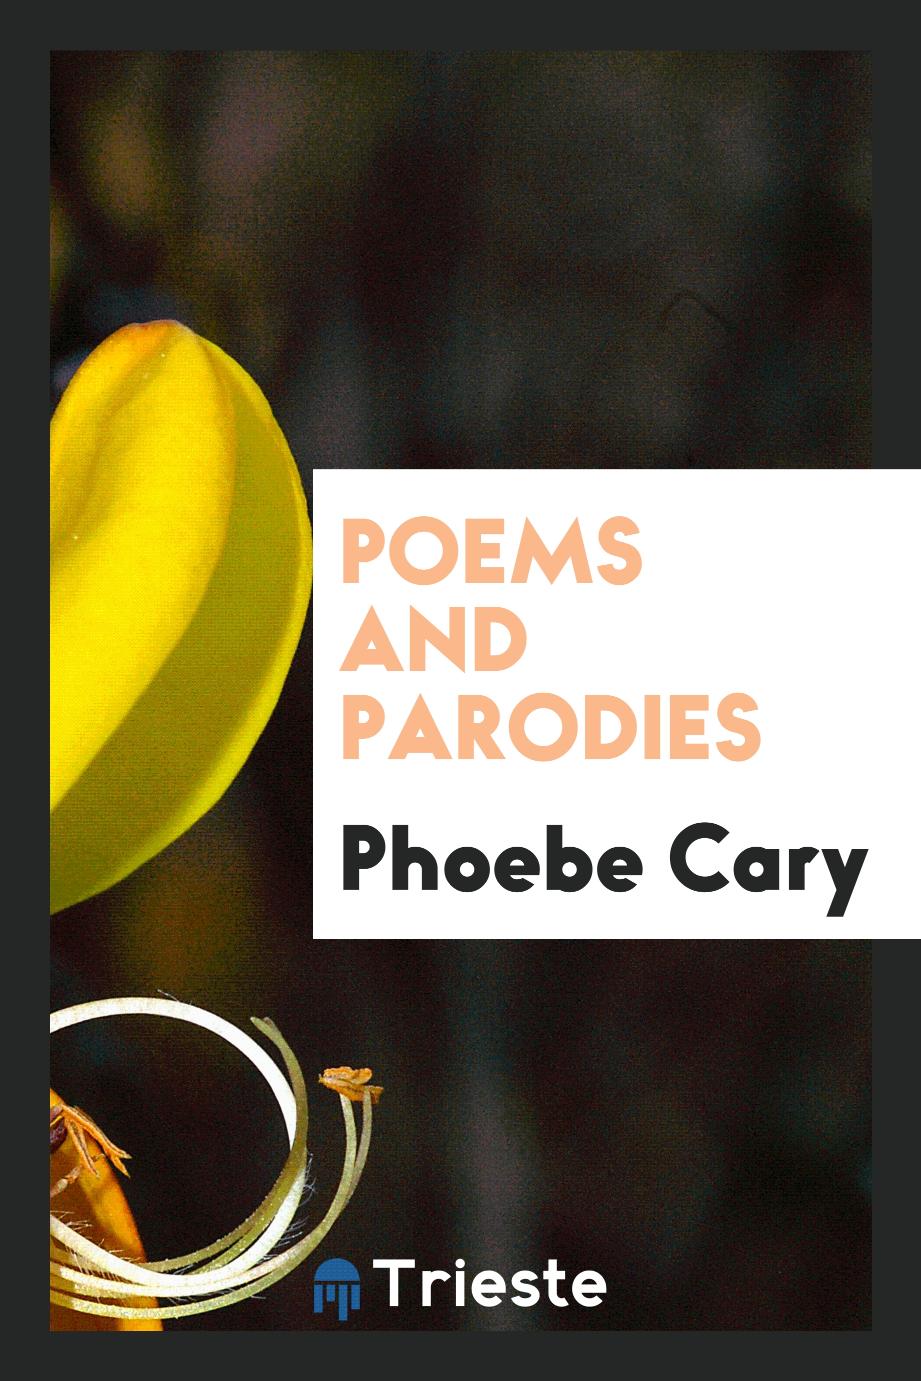 Poems and parodies